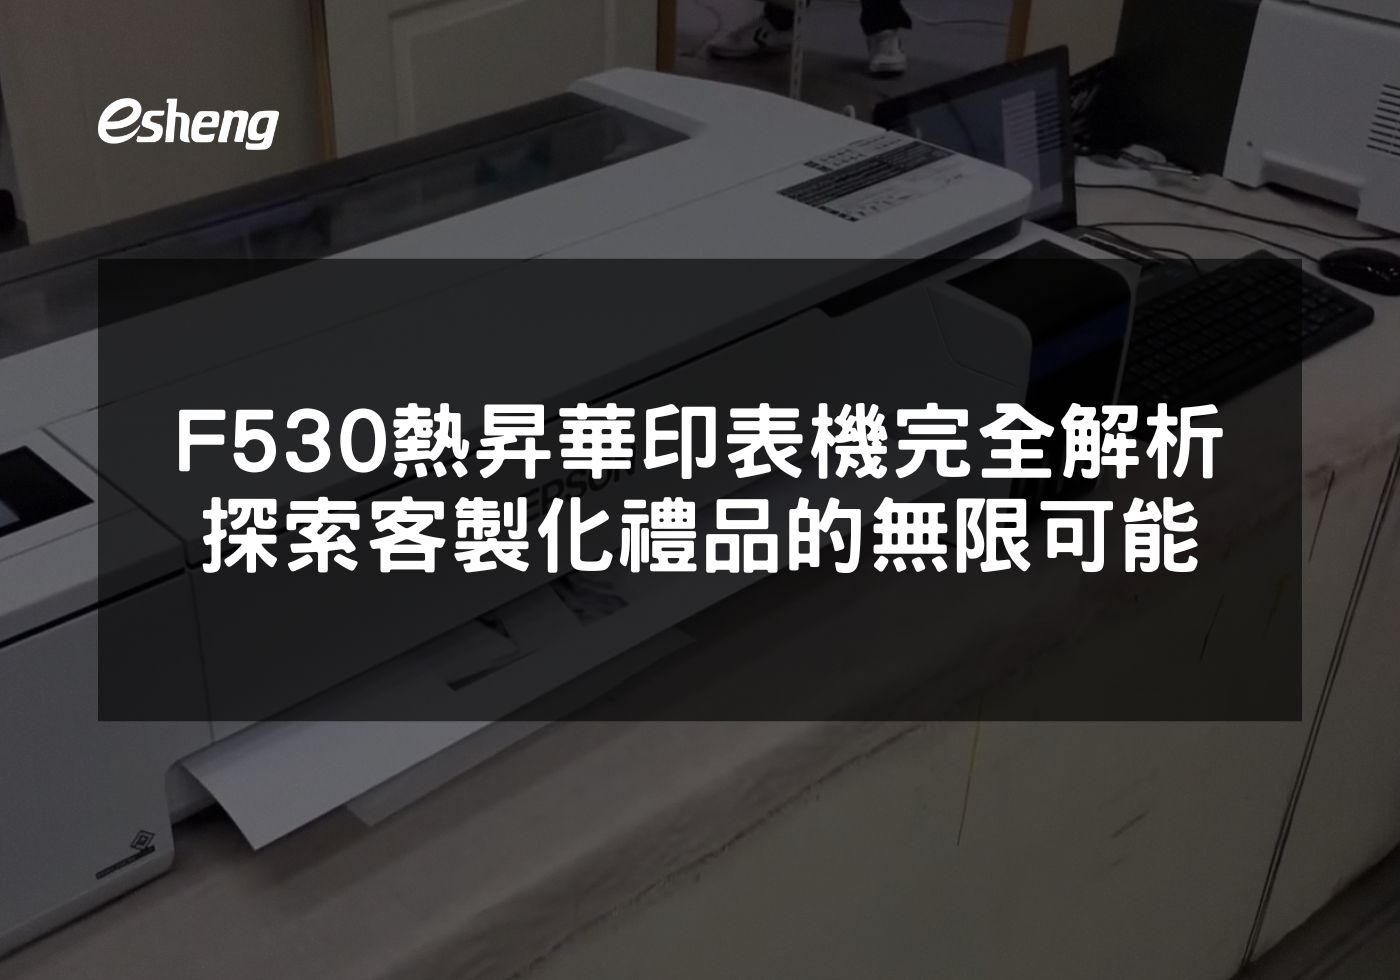 探索Epson SureColor SC-F530熱昇華印表機的創意應用